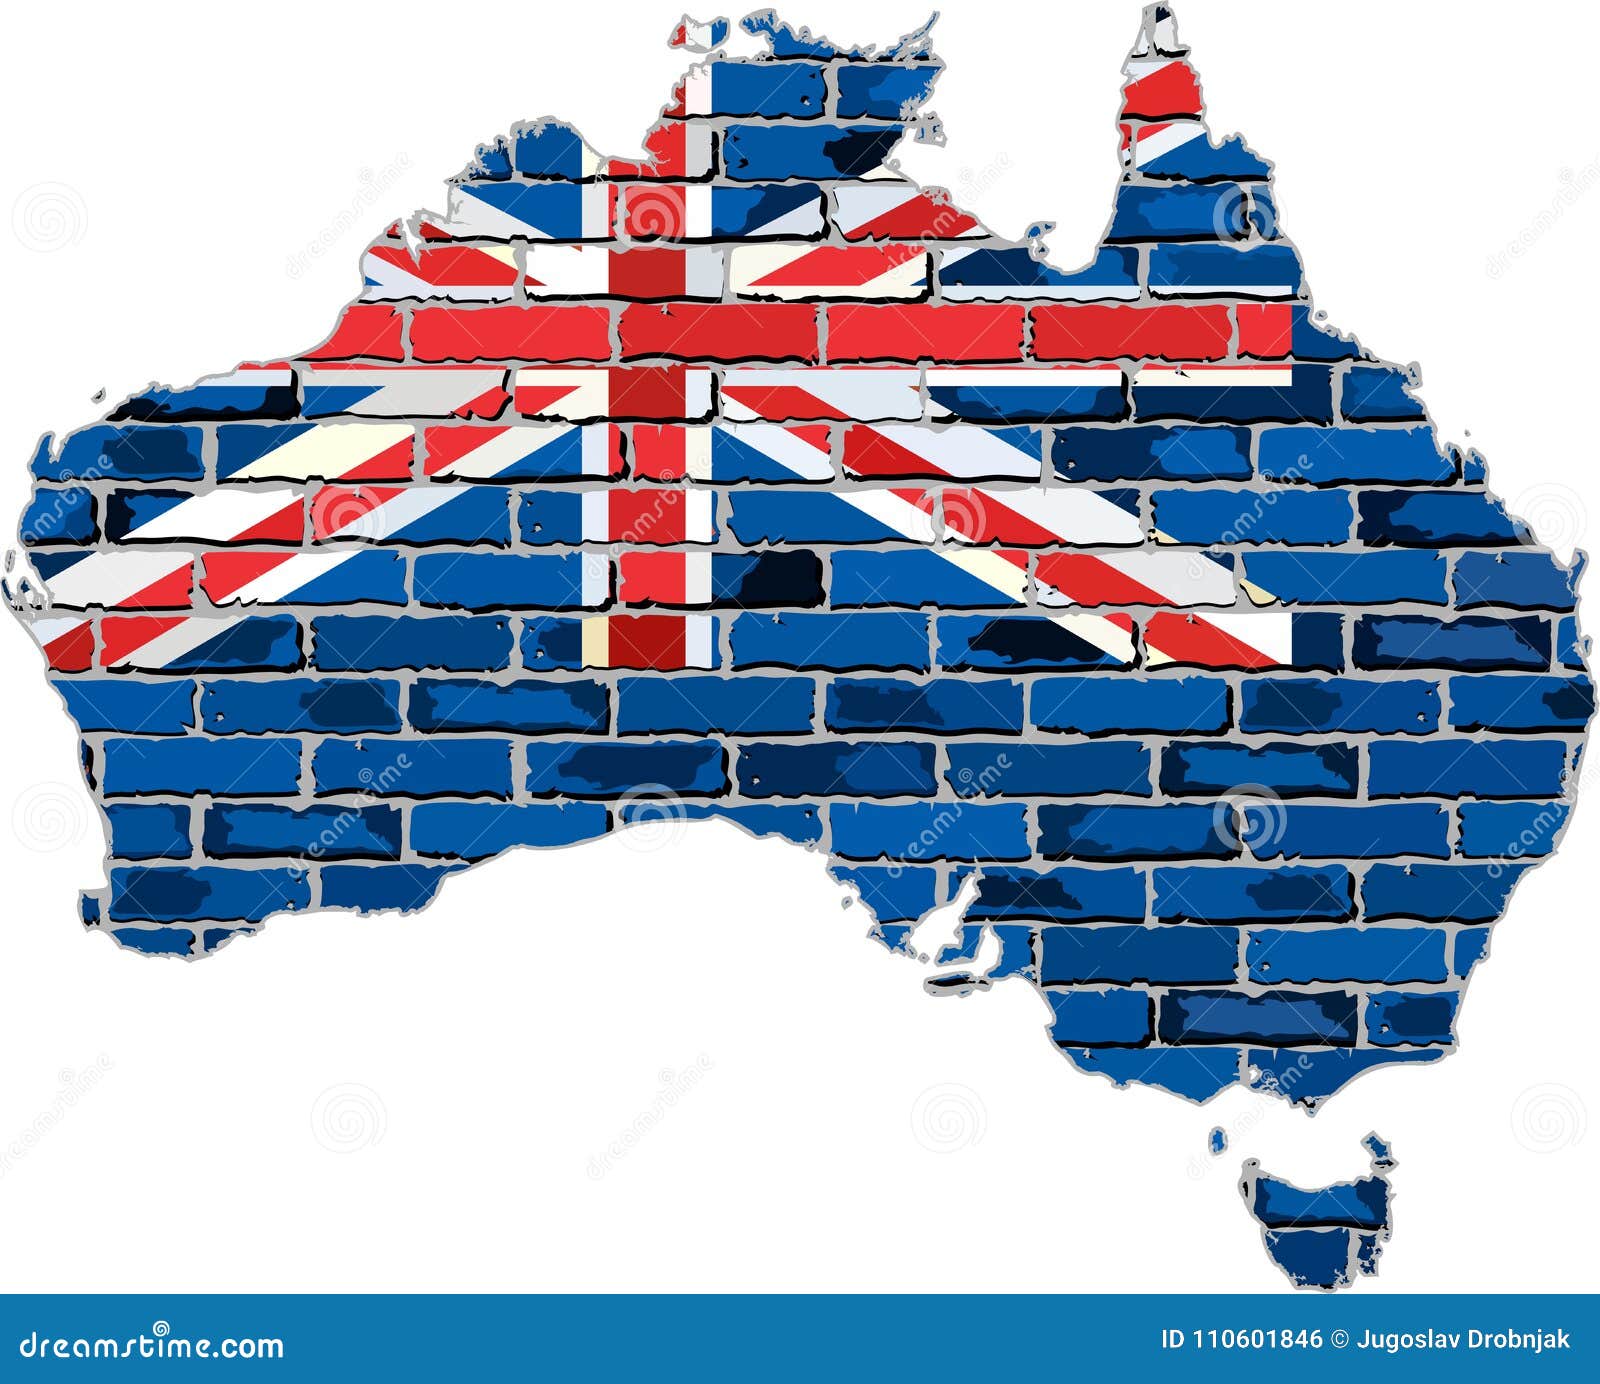 Australia Map On A Brick Wall Stock Vector Illustration Of